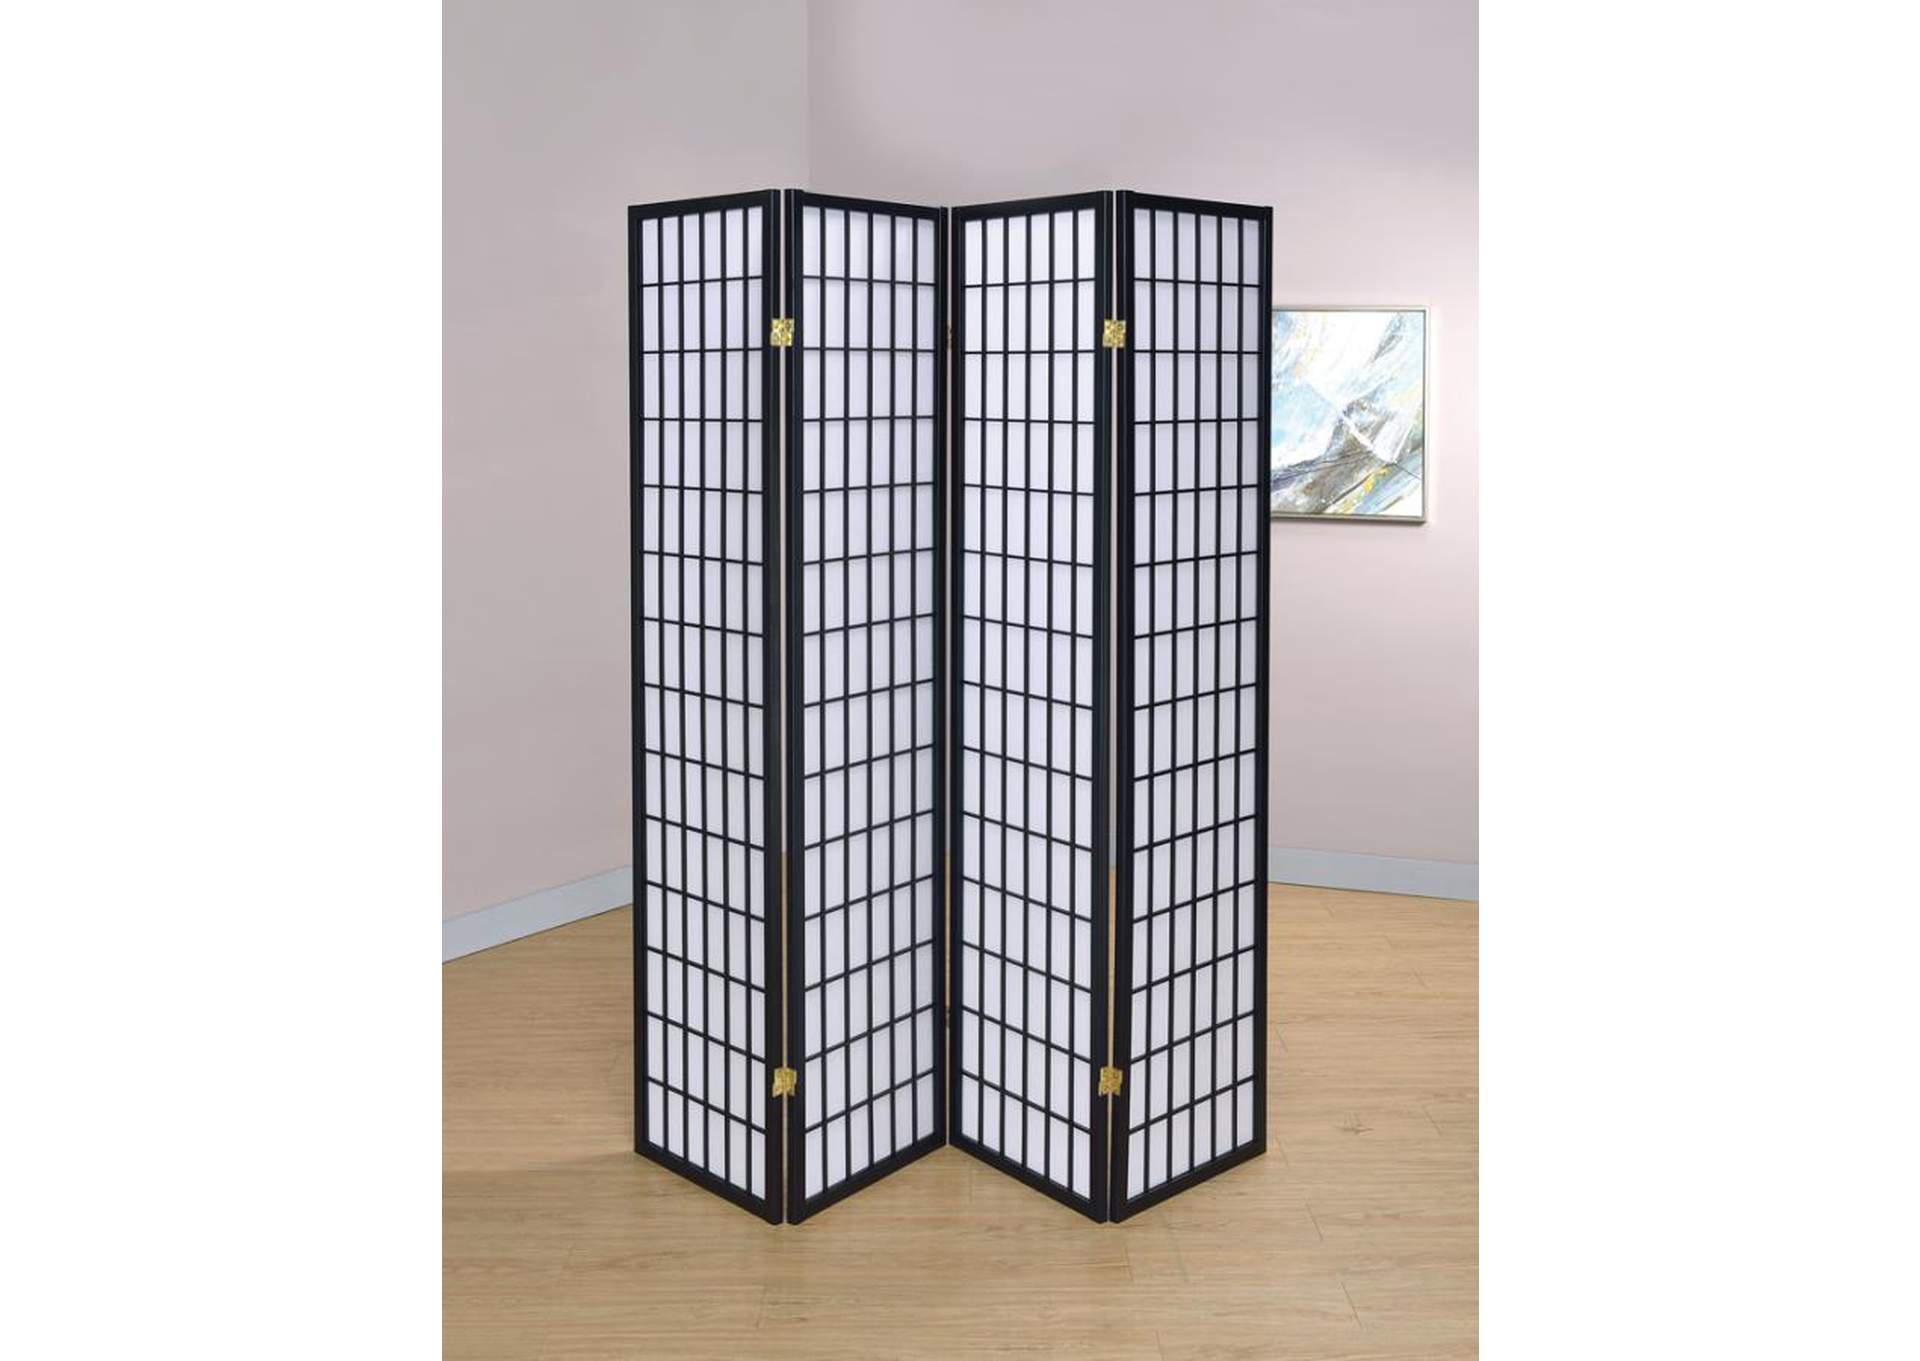 4-panel Folding Screen Black and White,Coaster Furniture